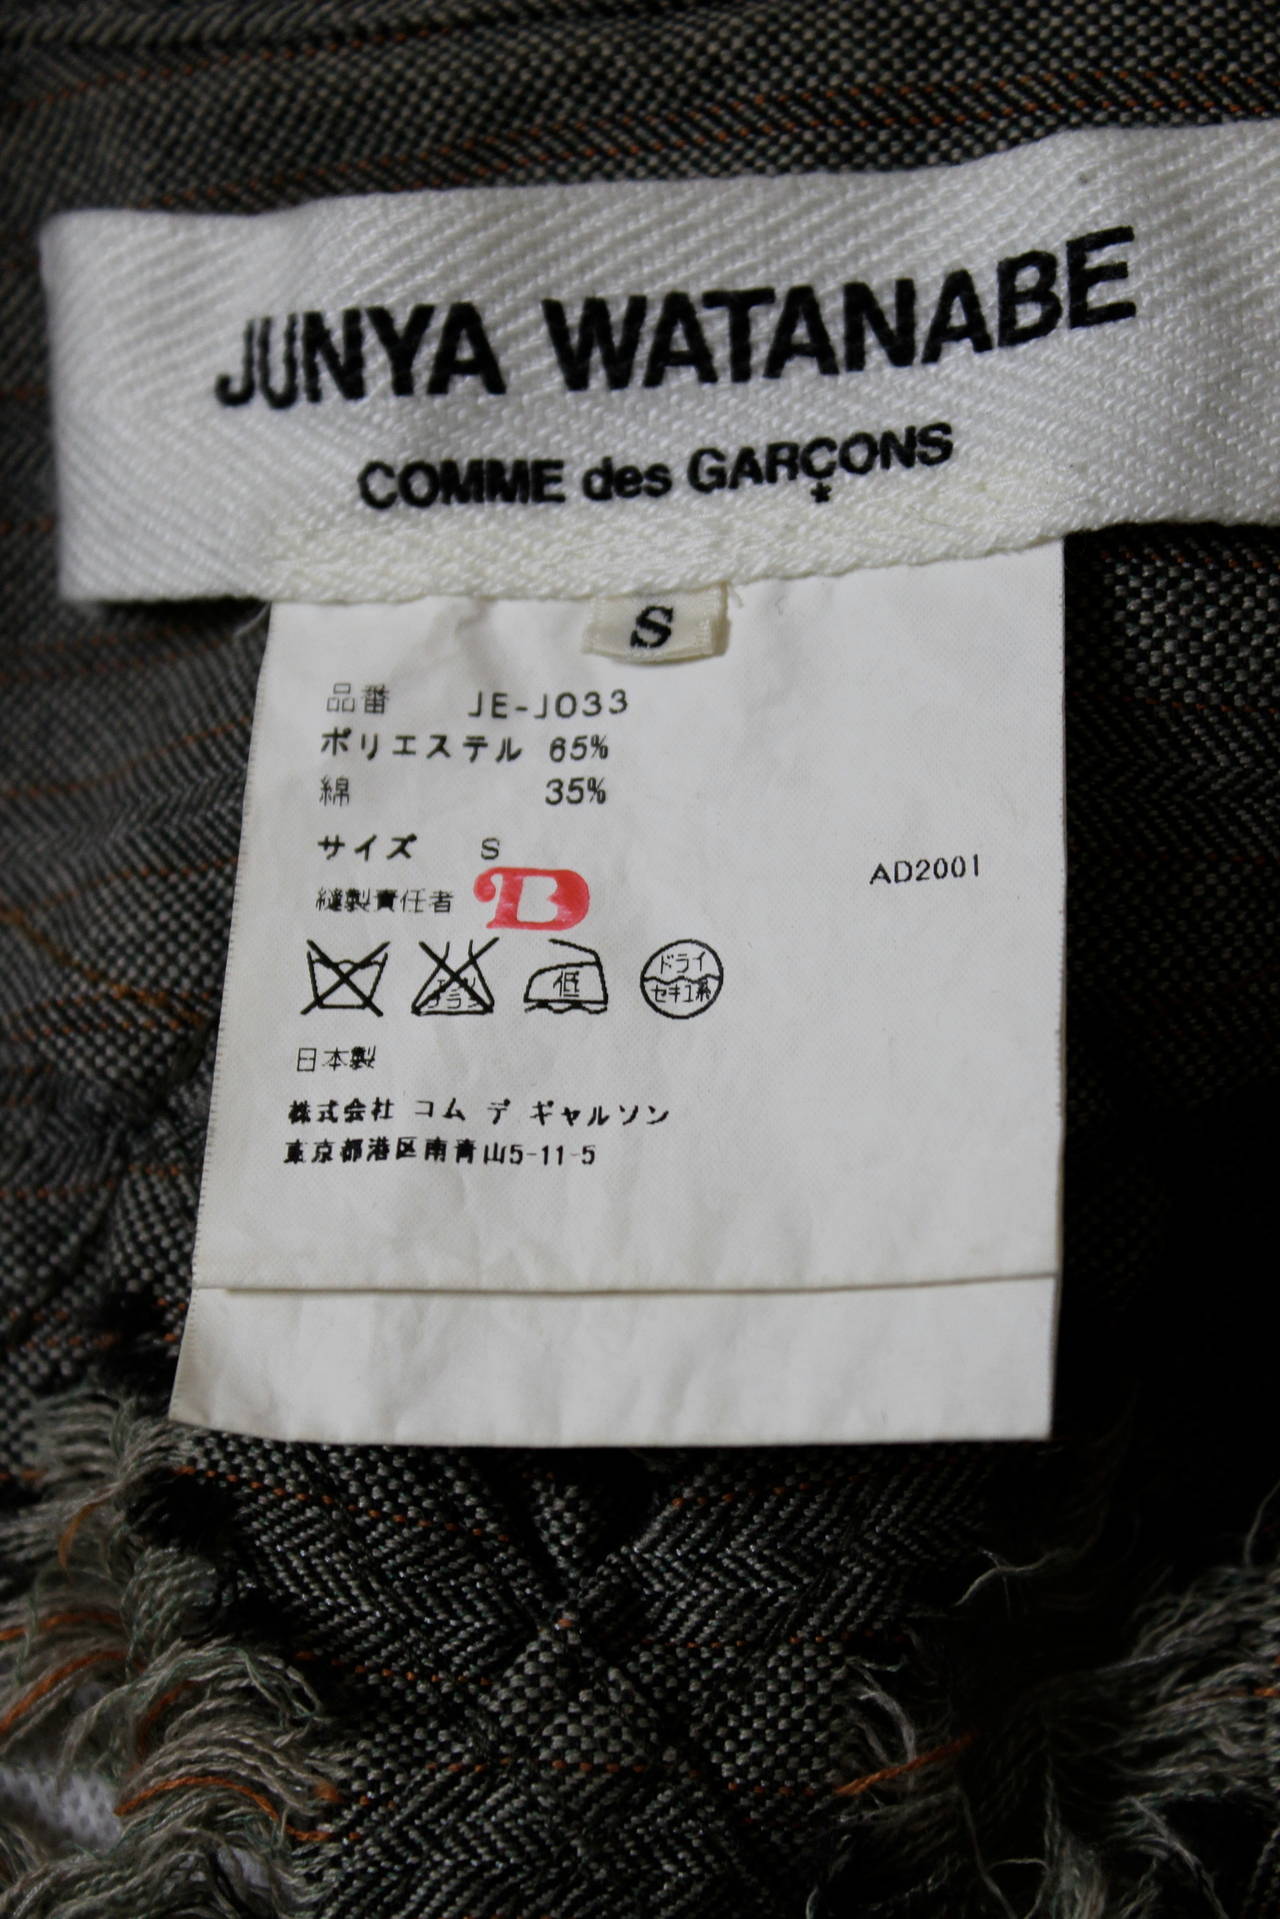 Junya Watanabe for Comme des Garcons AD2001 Runway Jacket 6